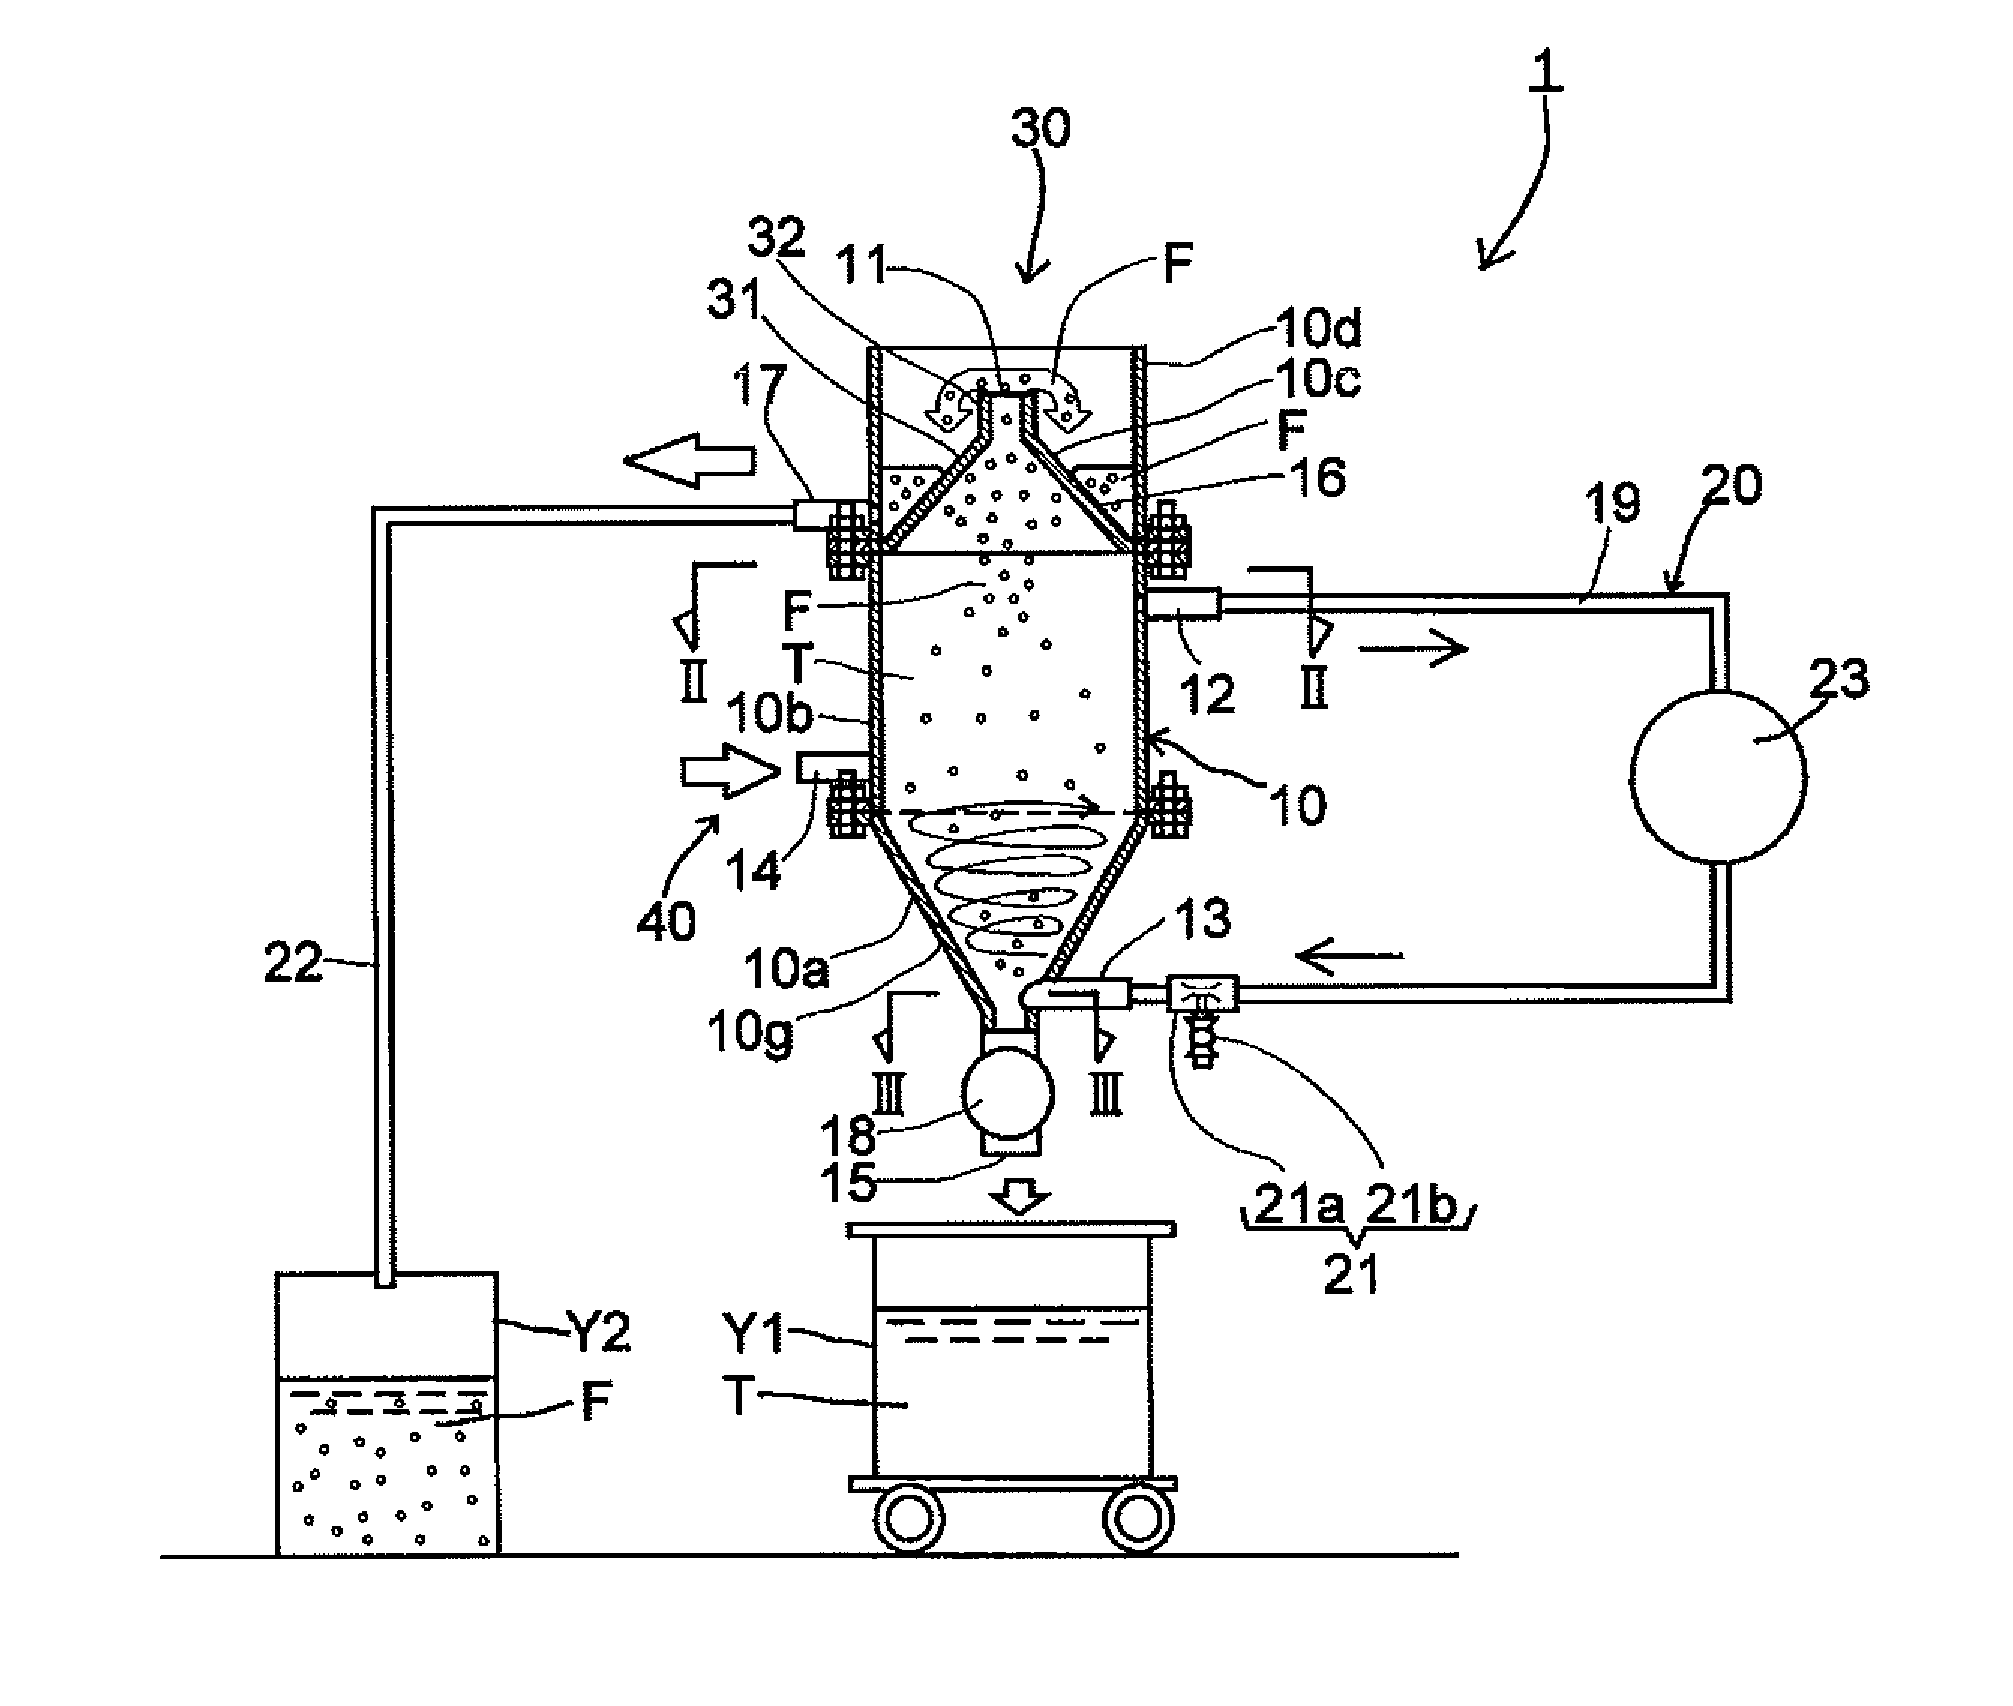 Floatation separation apparatus, method of floatation separation, and method of manufacturing products using the same